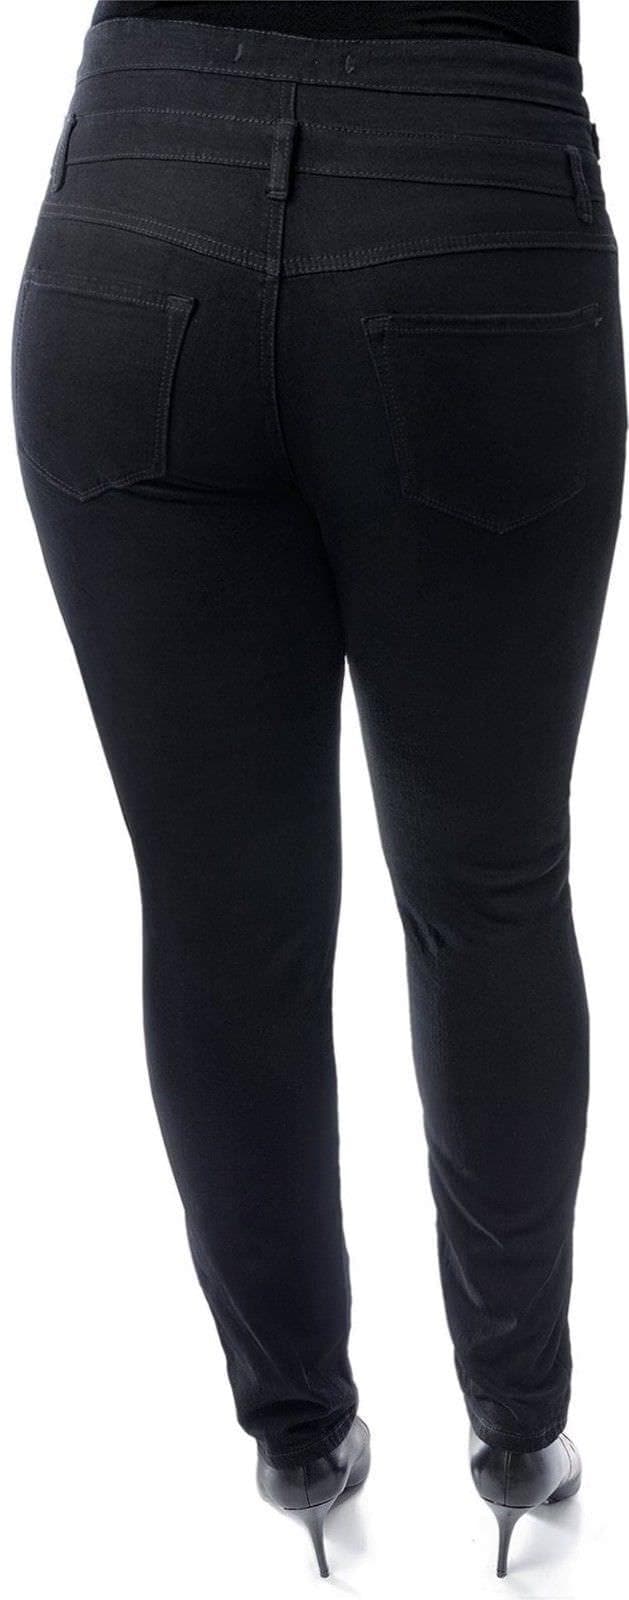 Jack David Womens Plus Size High Waisted BLACK/BLUE Stretch Skinny DENIM JEANS PANTS - Premium women Jean's from Jack David - Just $38.50! Shop now at Handbags Specialist Headquarter